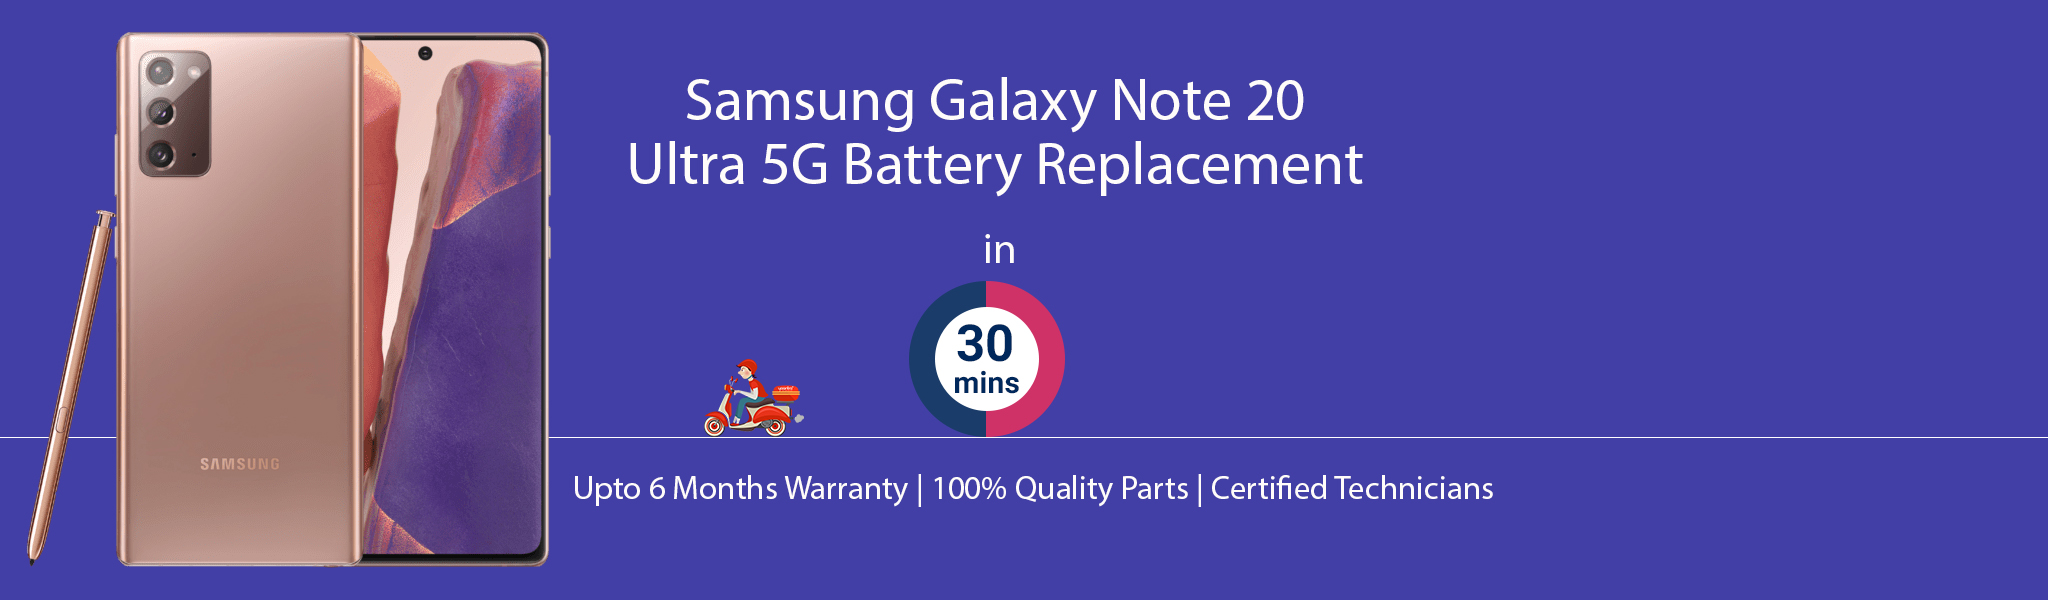 samsung-galaxy-note-20-ultra-5g-battery-replacement.jpg